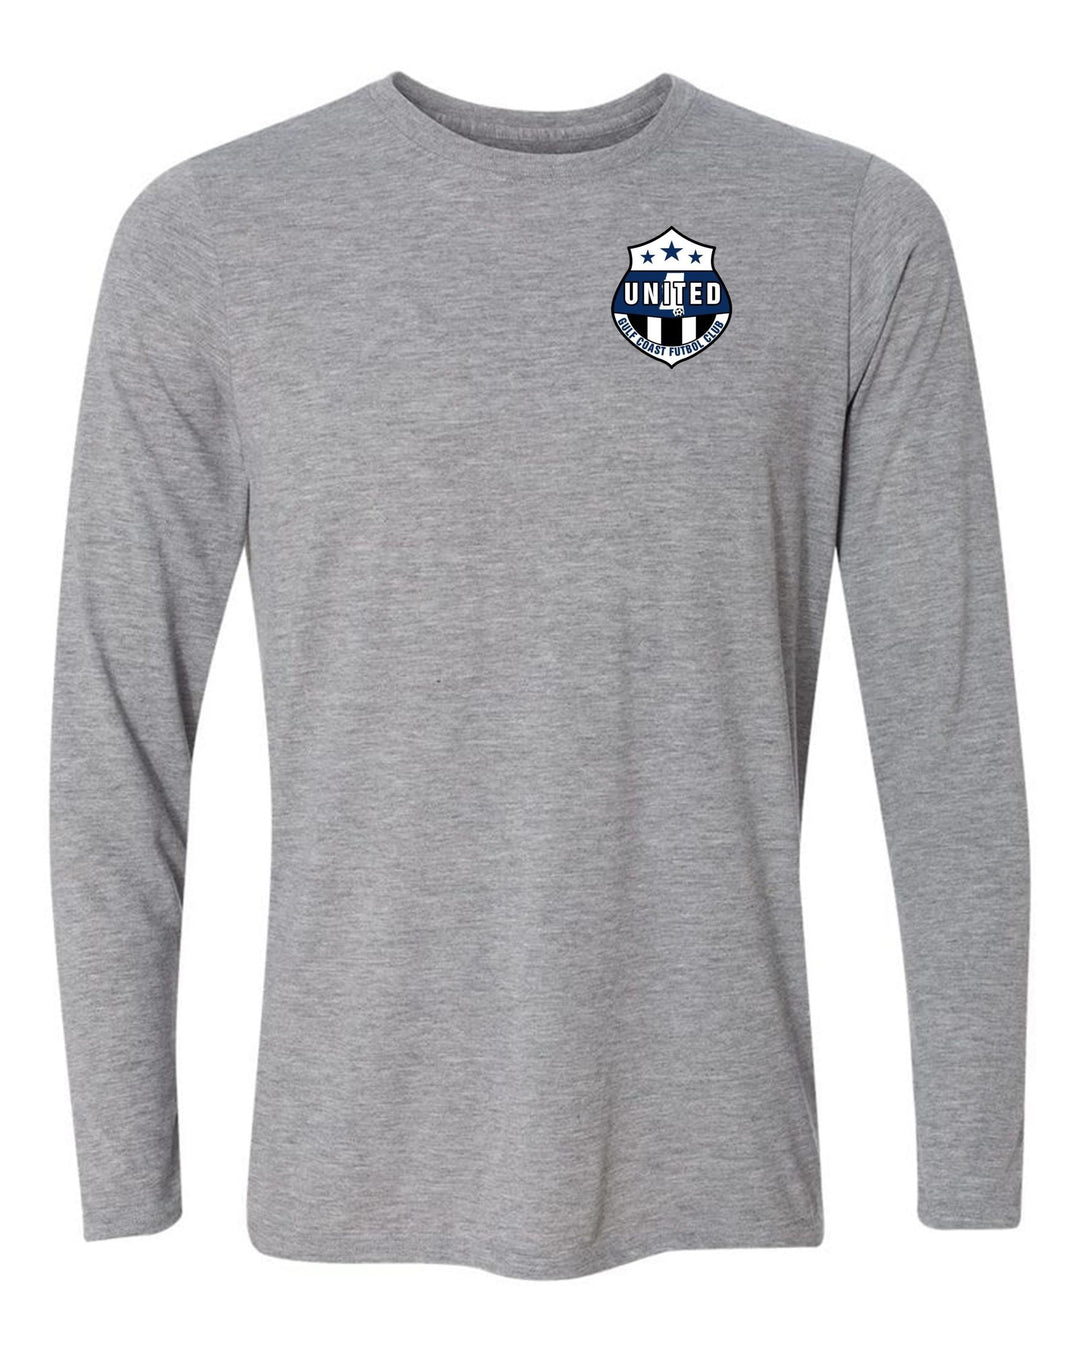 Gulf Coast United LS T-shirt - Royal or Sport Grey Gulf Coast United Spiritwear SPORT GREY YOUTH EXTRA LARGE - Third Coast Soccer